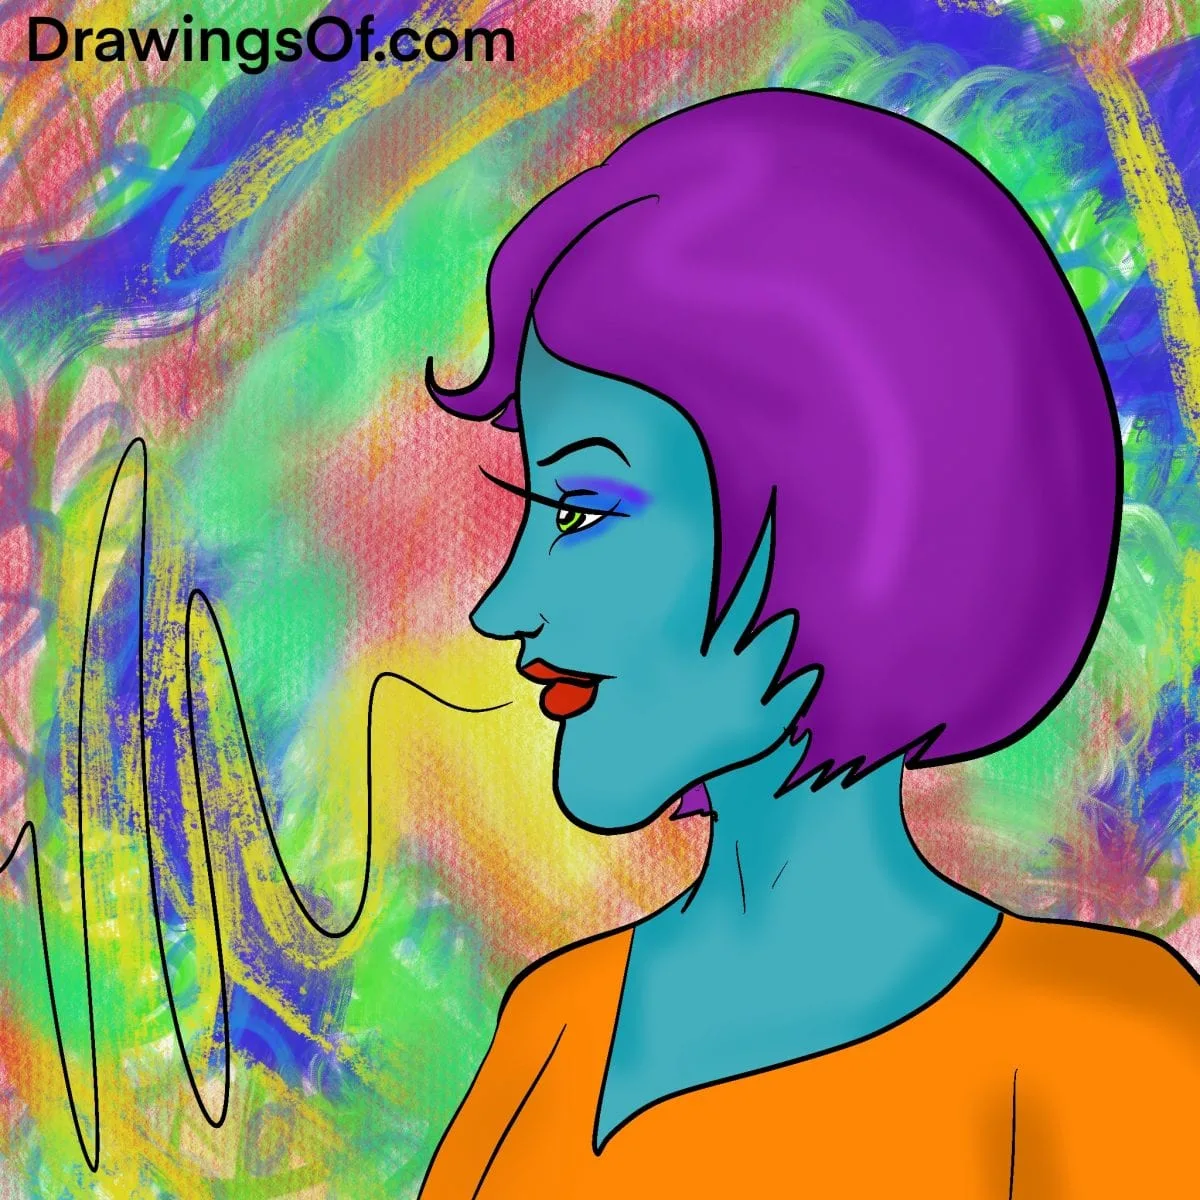 Blue skin purple hair drawing of a woman